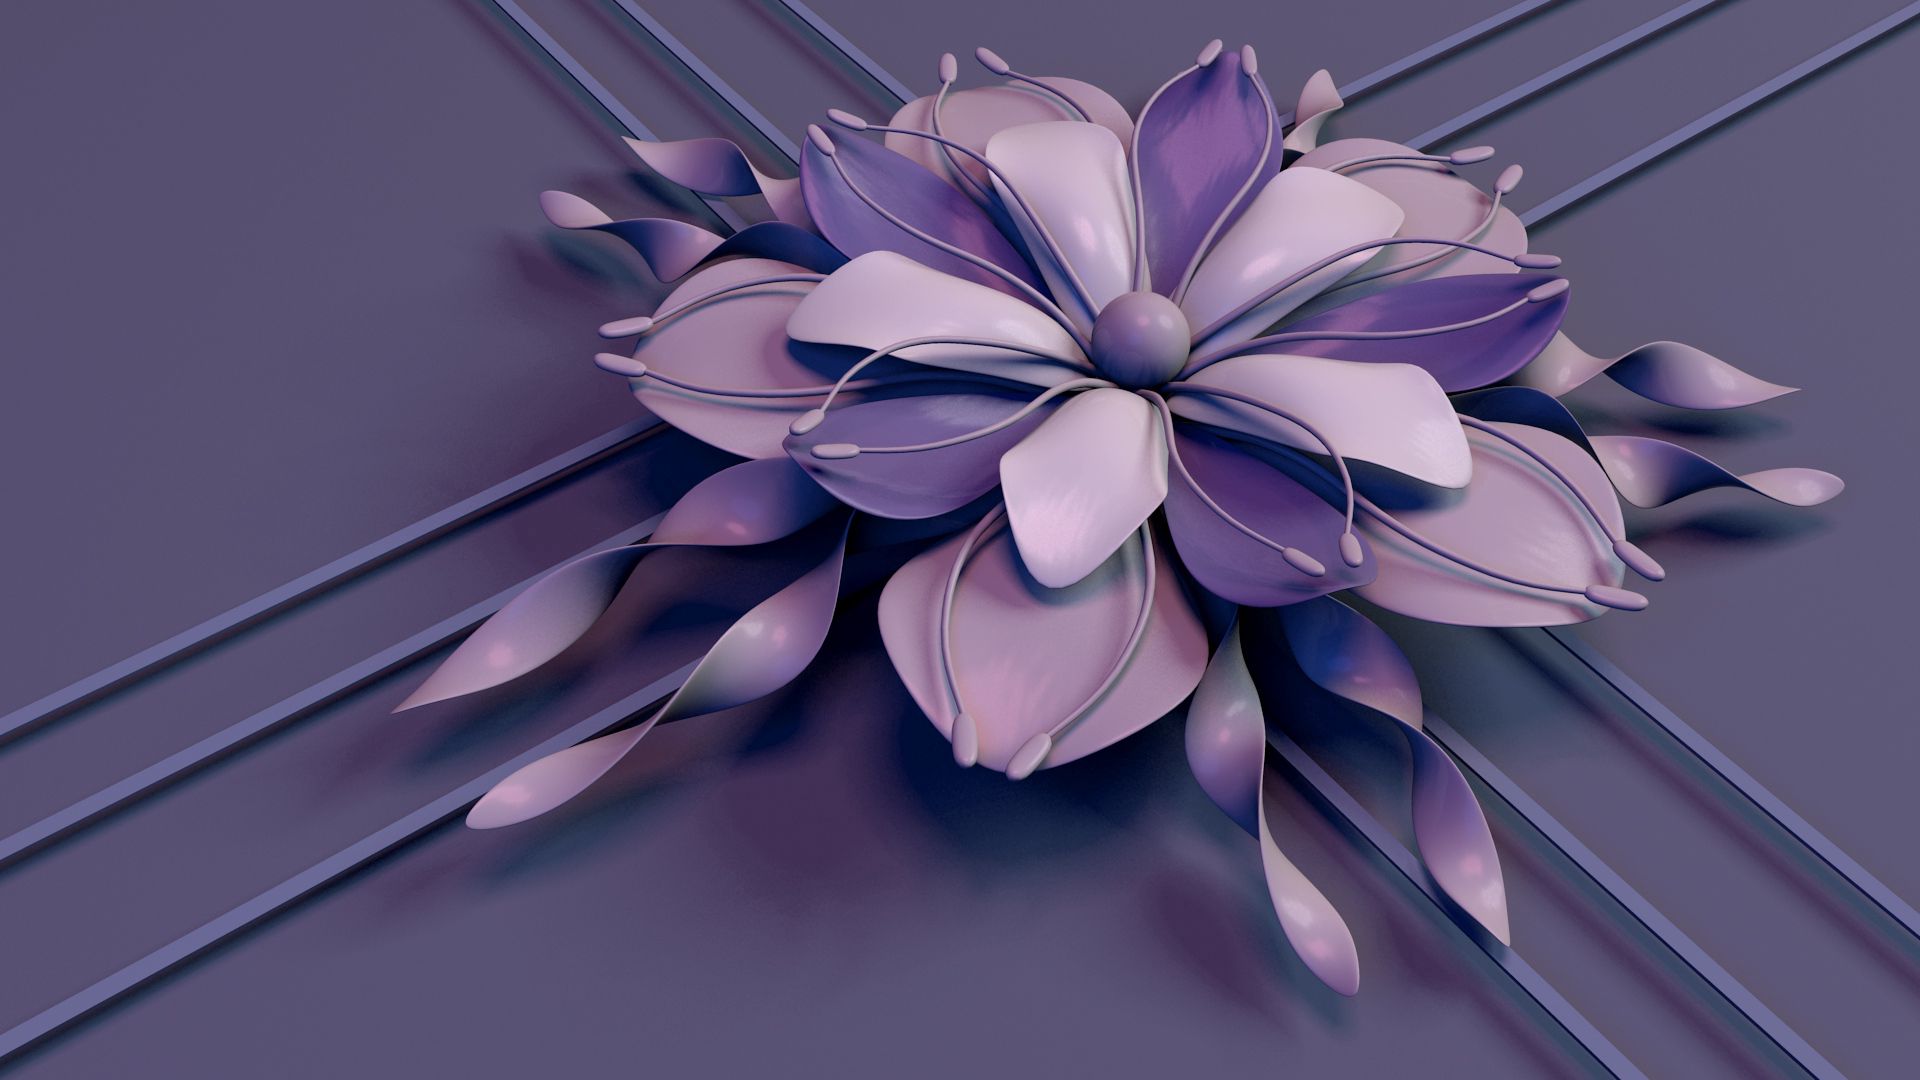 Flower Wallpaper for desktop devices